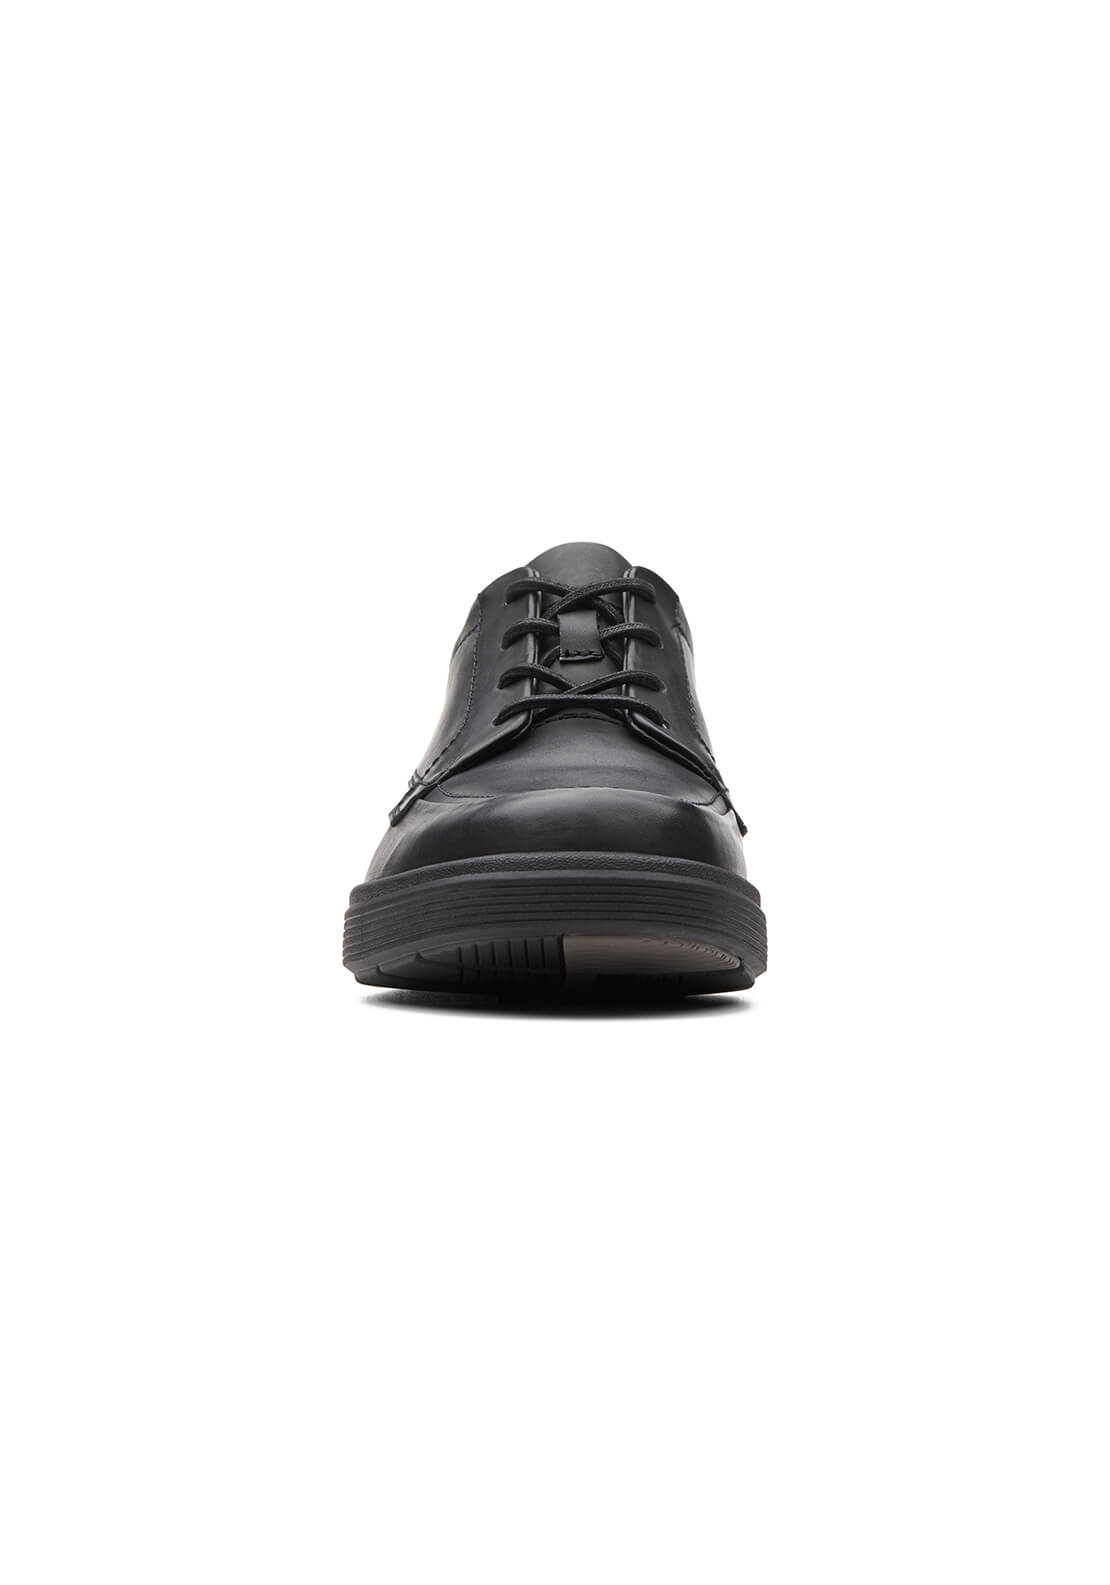 Clarks Un Abode Ease Casual Shoe - Black 5 Shaws Department Stores